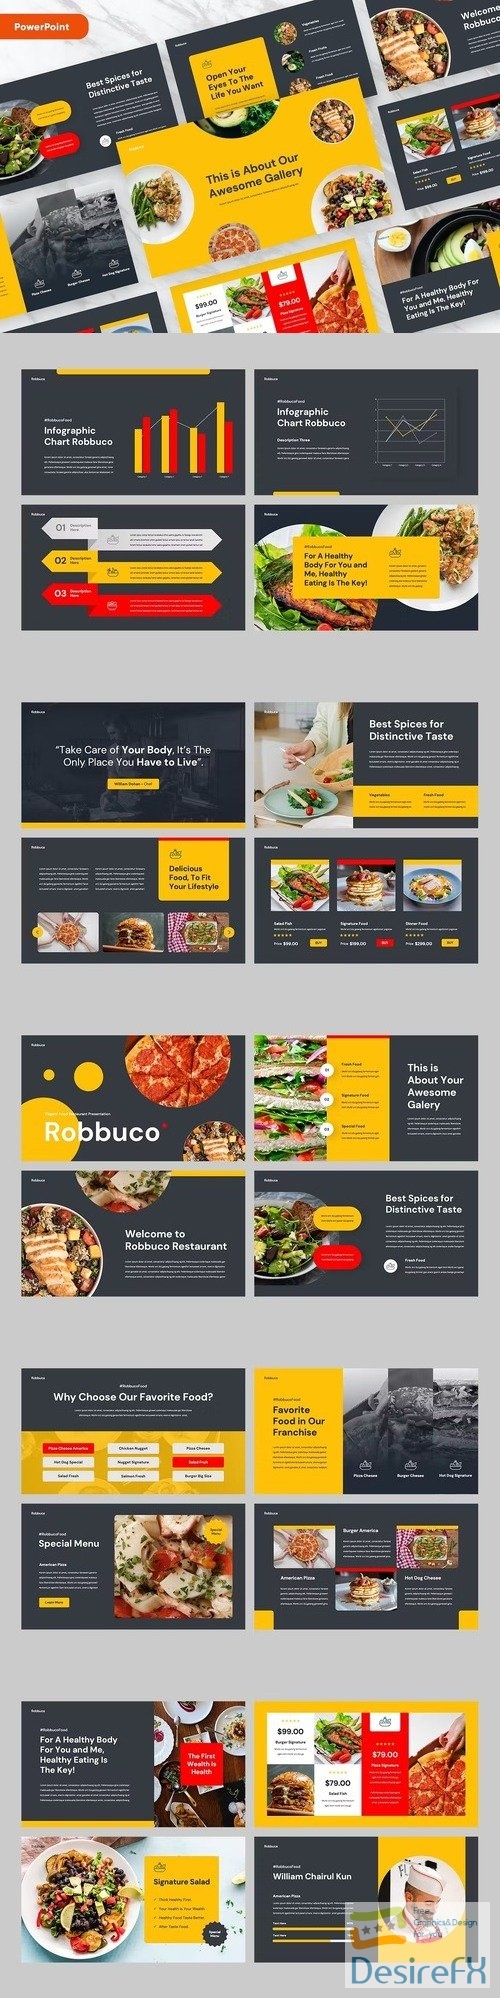 ROBBUCO - Food & Restaurant Powerpoint Template